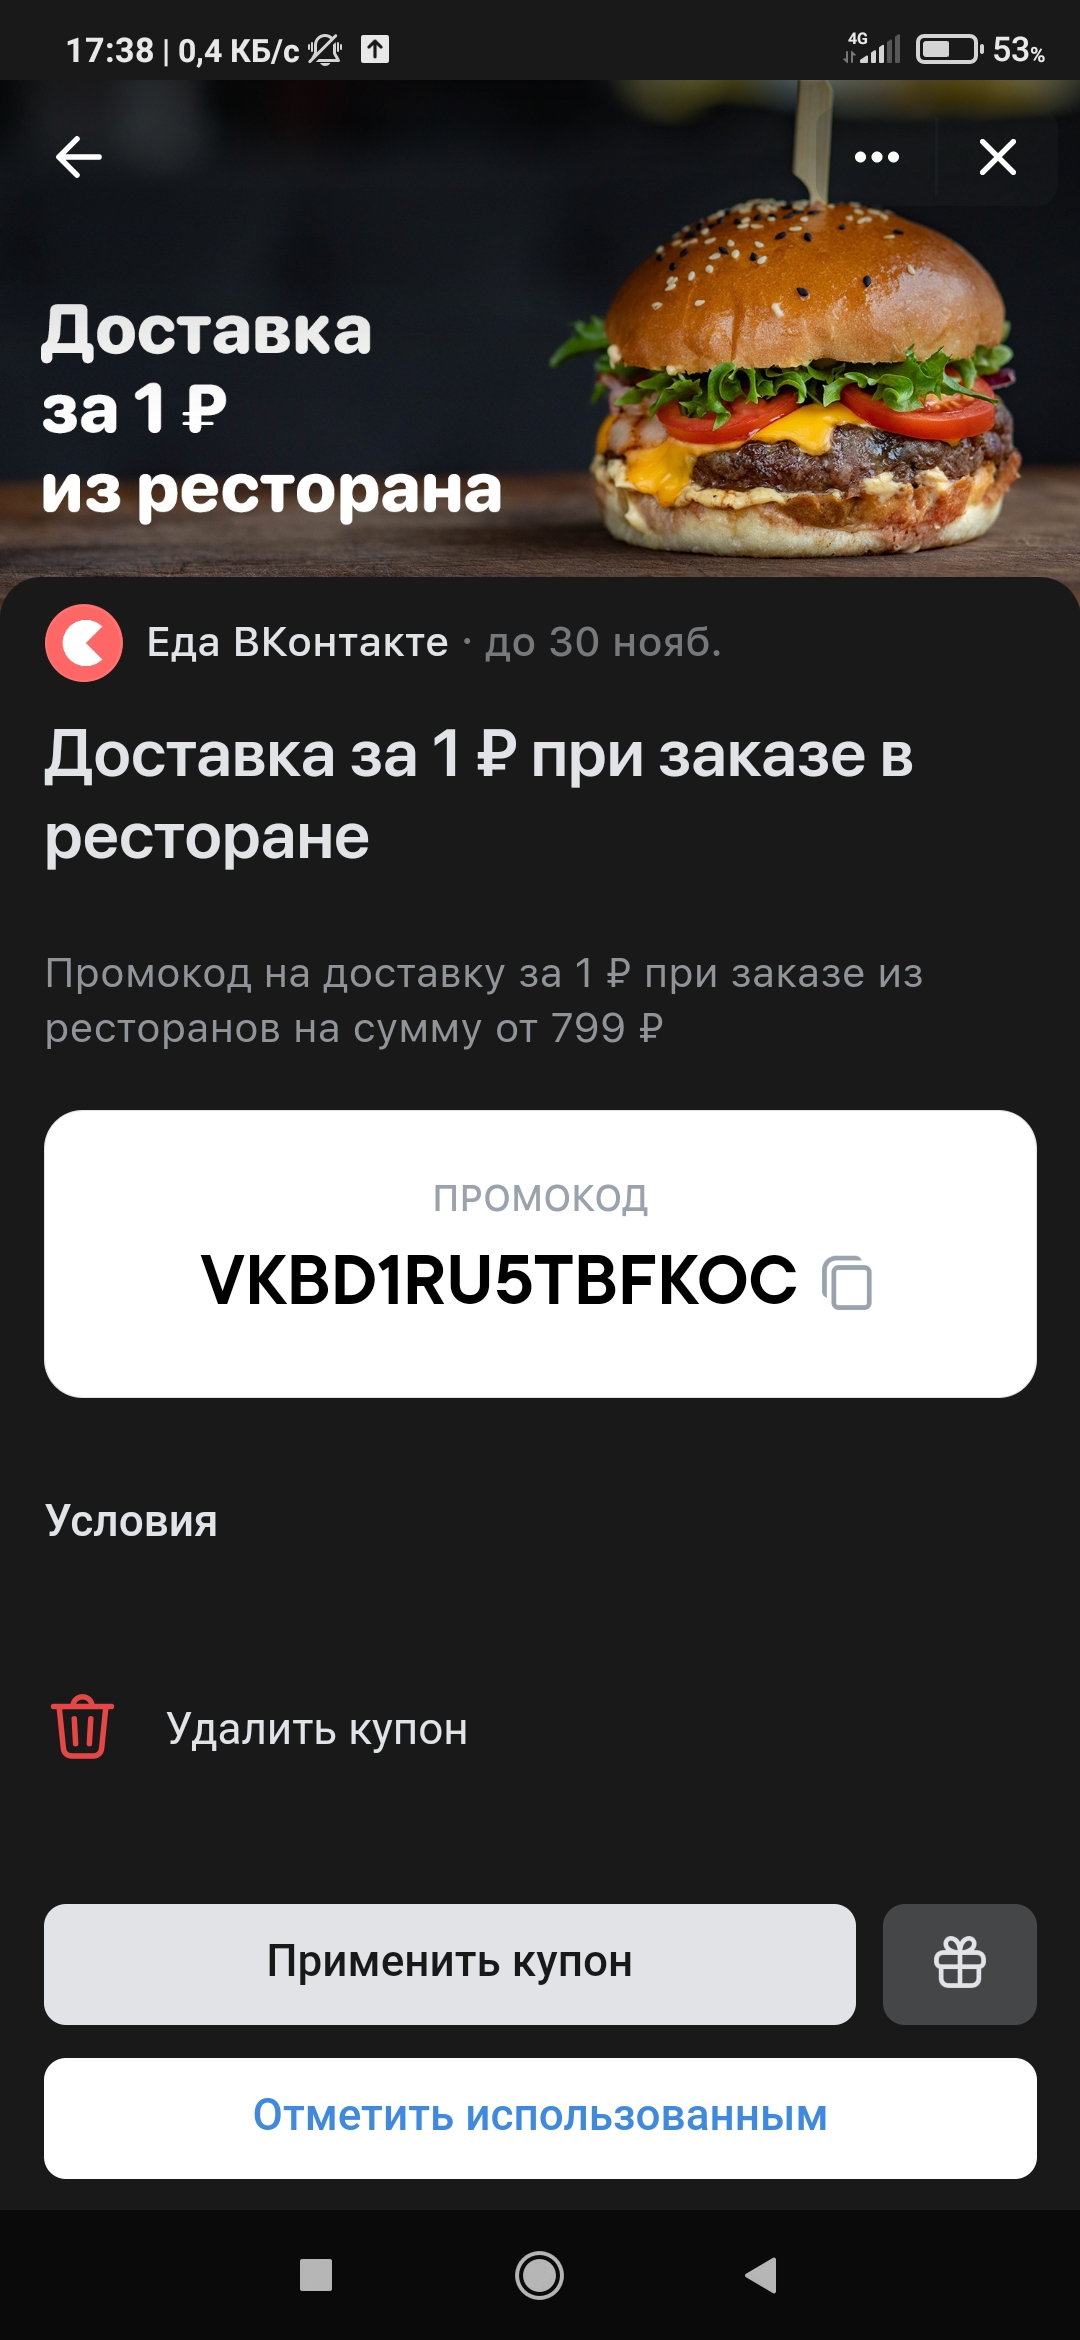 Screenshot_2021-10-16-17-38-30-707_com.vkontakte.android.jpg